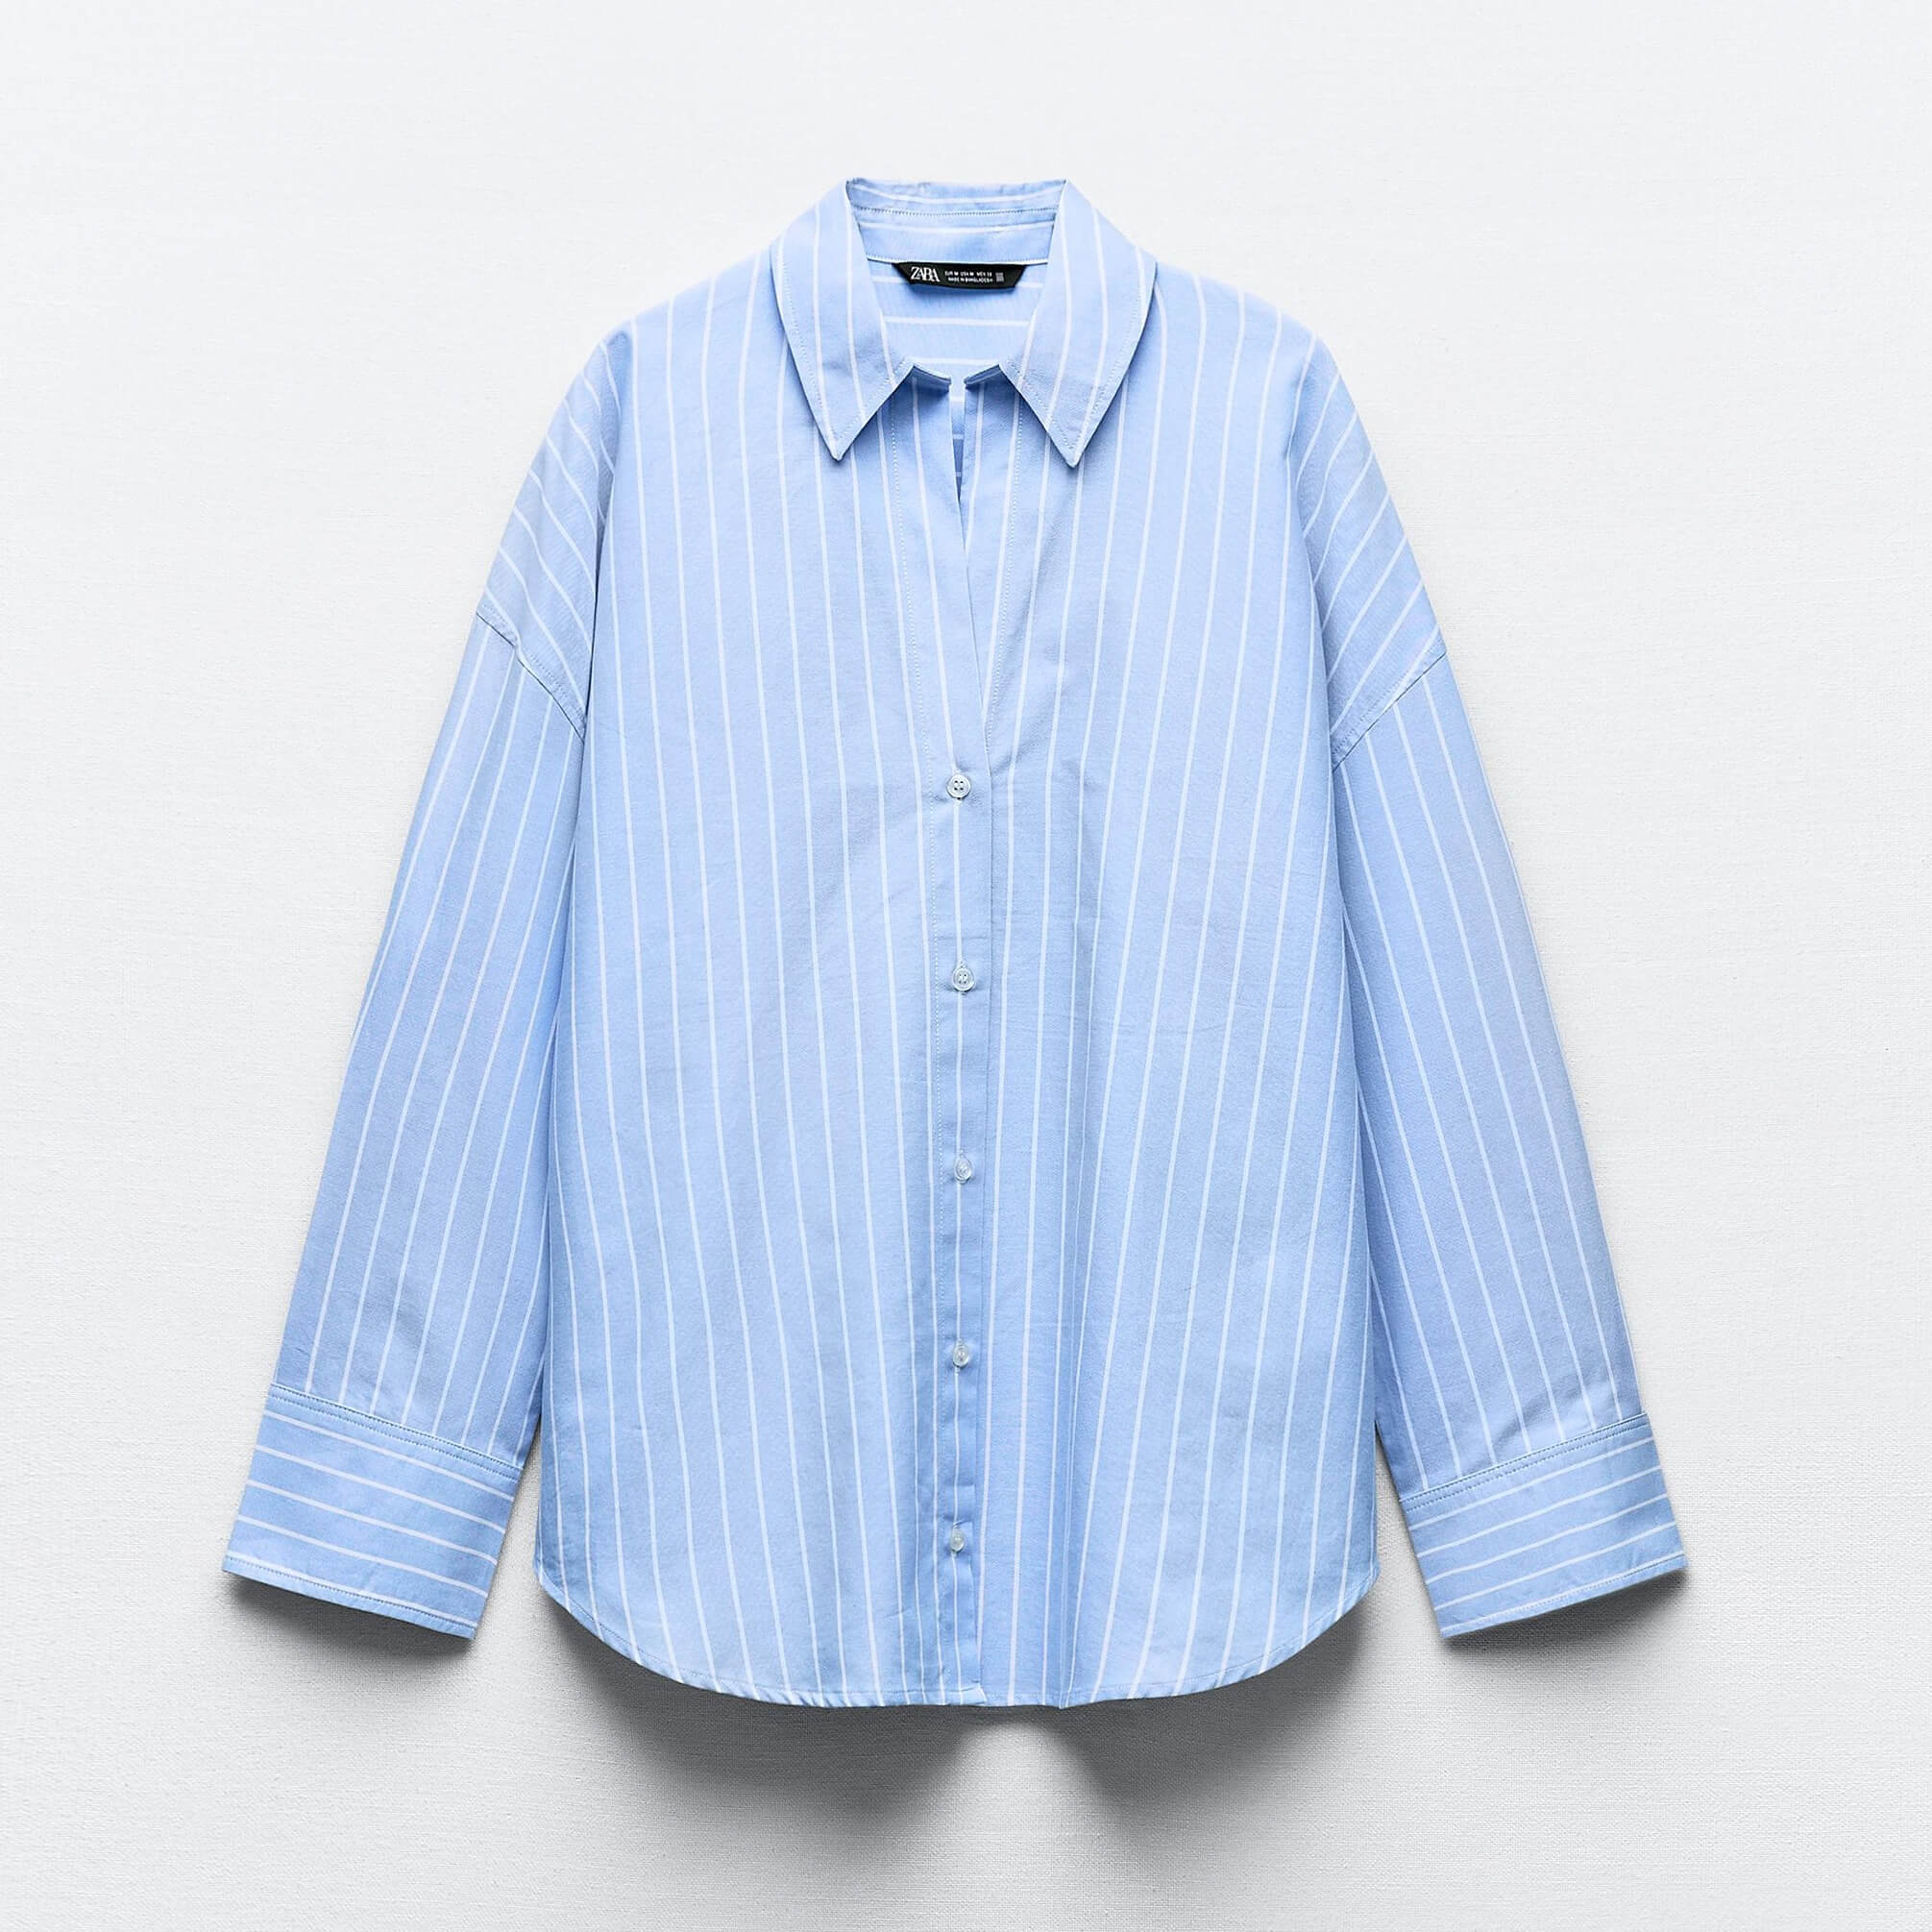 Рубашка Zara Striped Oxford, голубой/белый рубашка zara cropped striped голубой белый